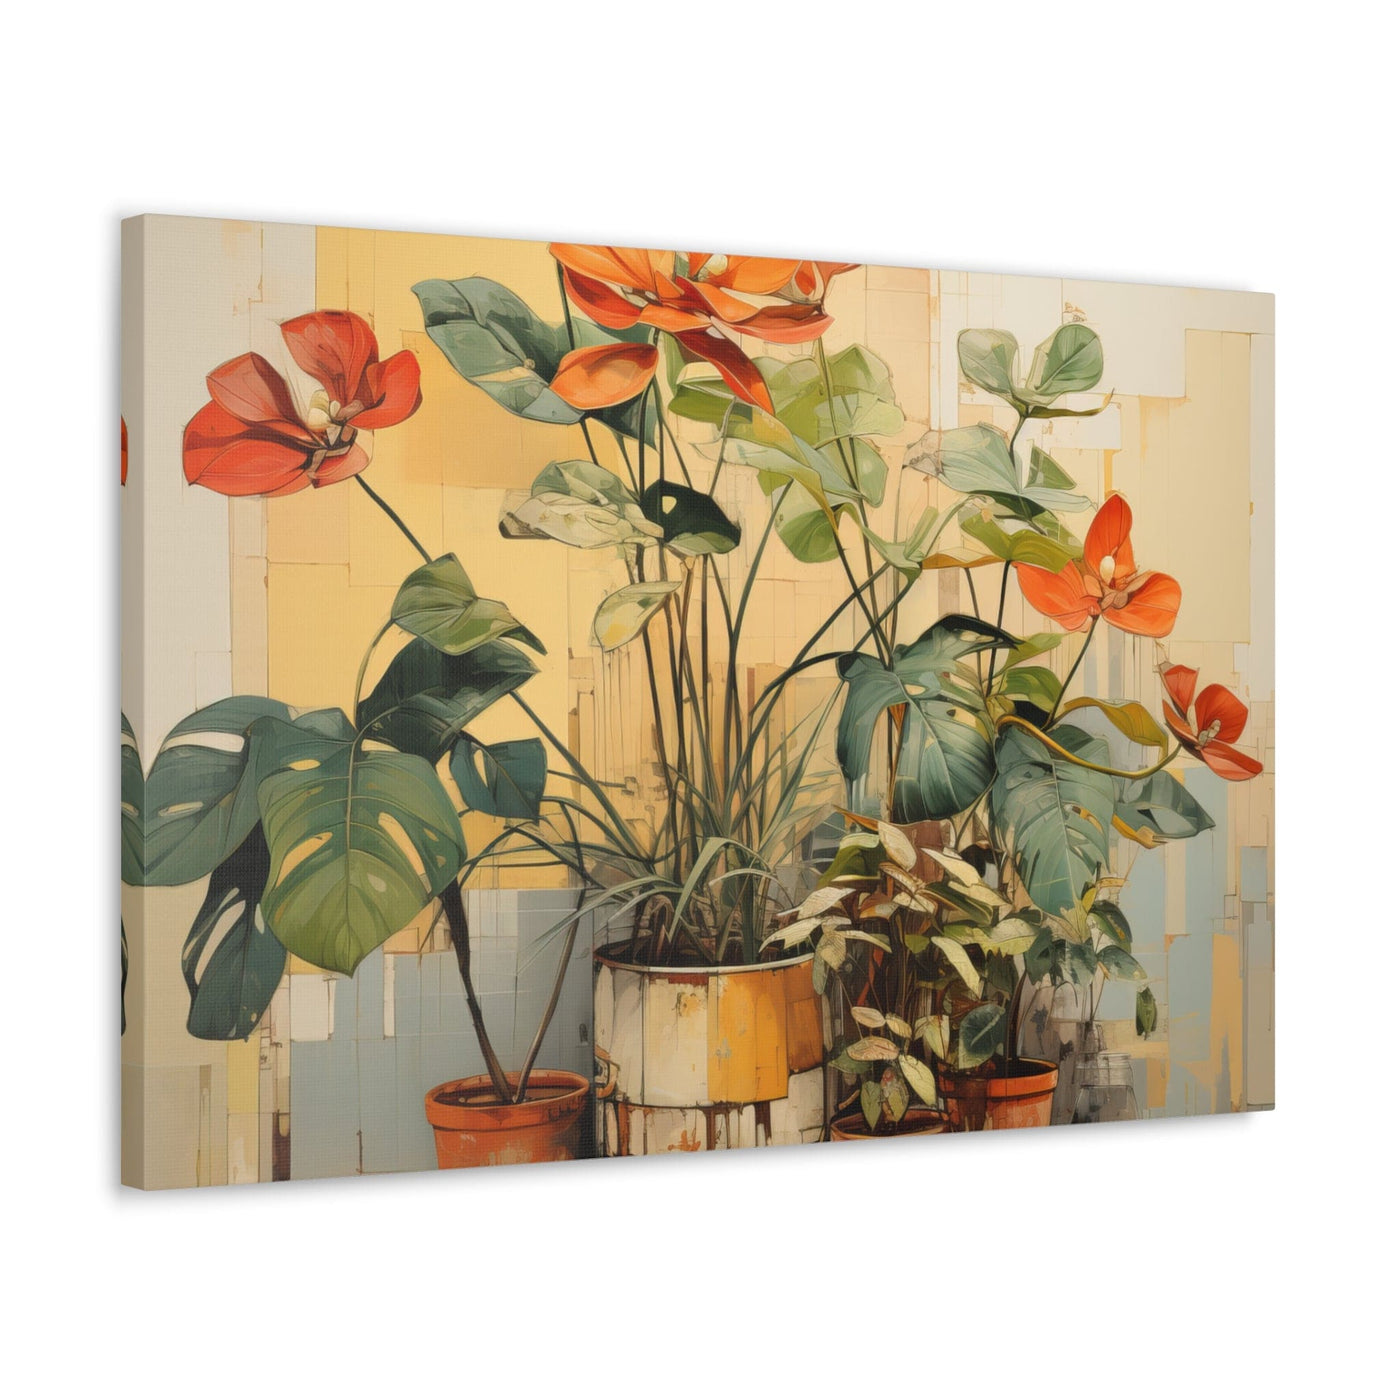 Wall Art Decor Canvas Print Artwork Earthy Rustic Potted Plants - Canvas